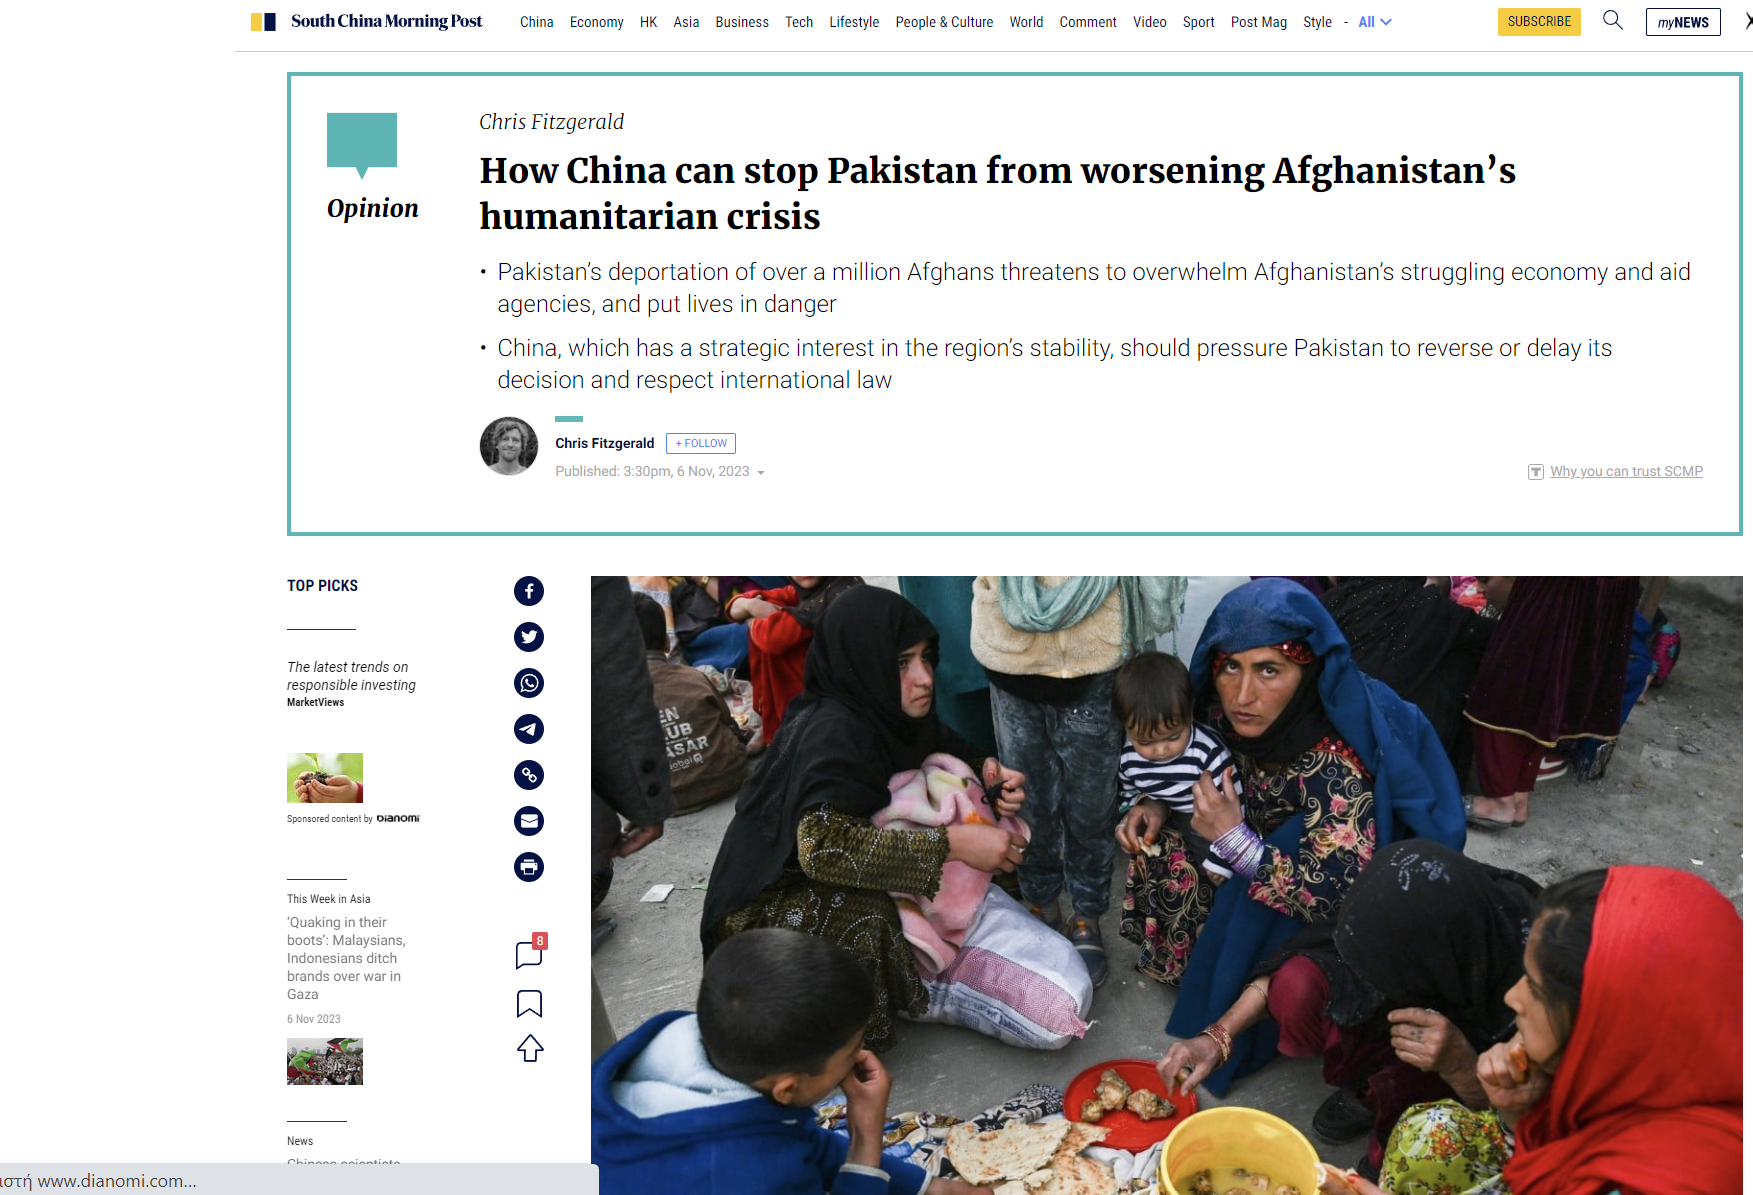 South China Morning Post: Πώς η Κίνα μπορεί να εμποδίσει το Πακιστάν να επιδεινώσει την ανθρωπιστική κρίση στο Αφγανιστάν